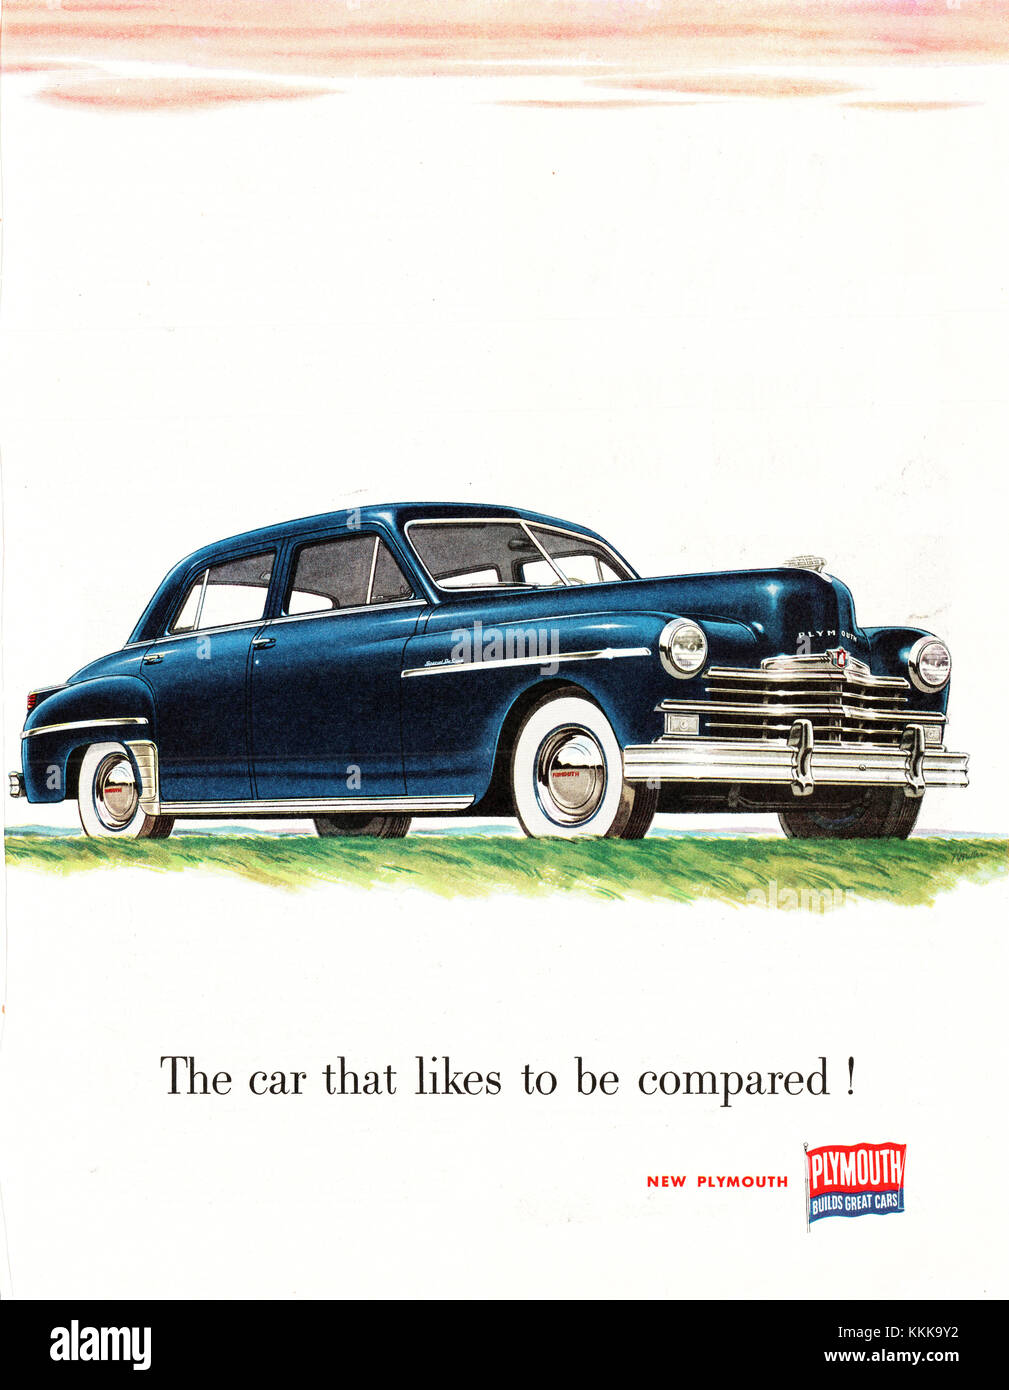 1949 U.S. Magazine Plymouth Cars Advert Stock Photo